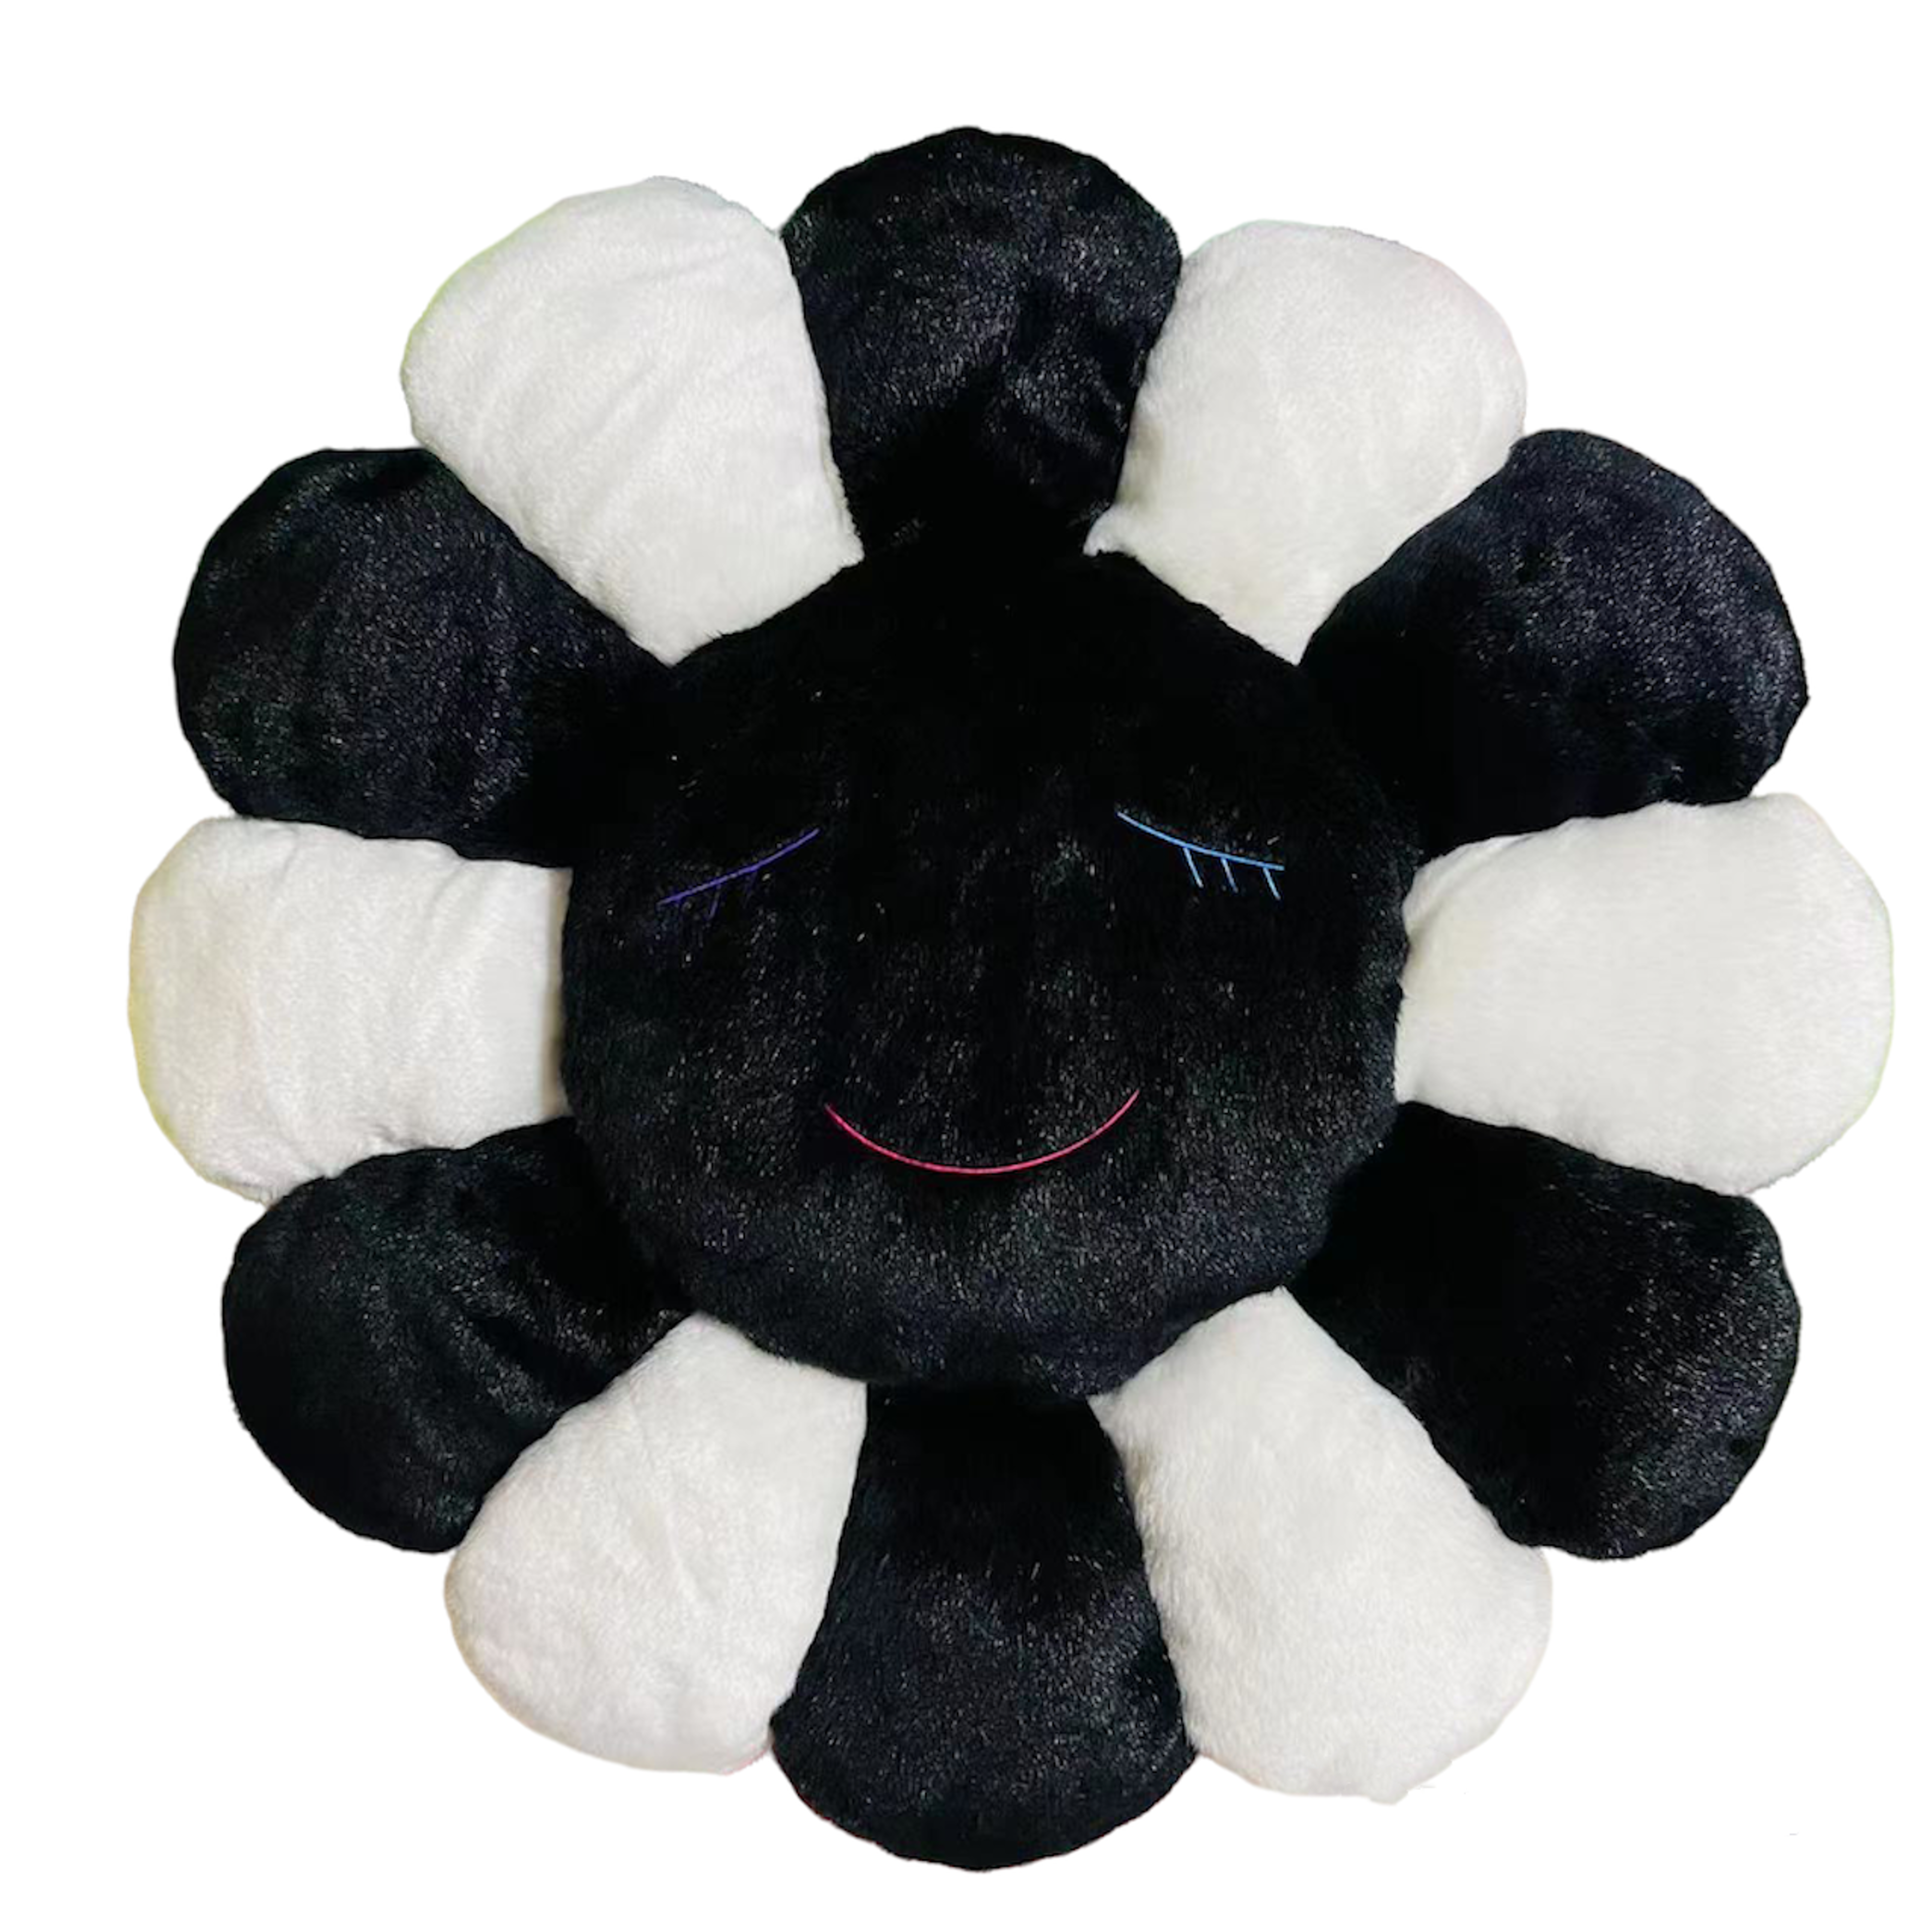 Alternate View 1 of Takashi Murakami flower pillow cushion black and white kaikai ki